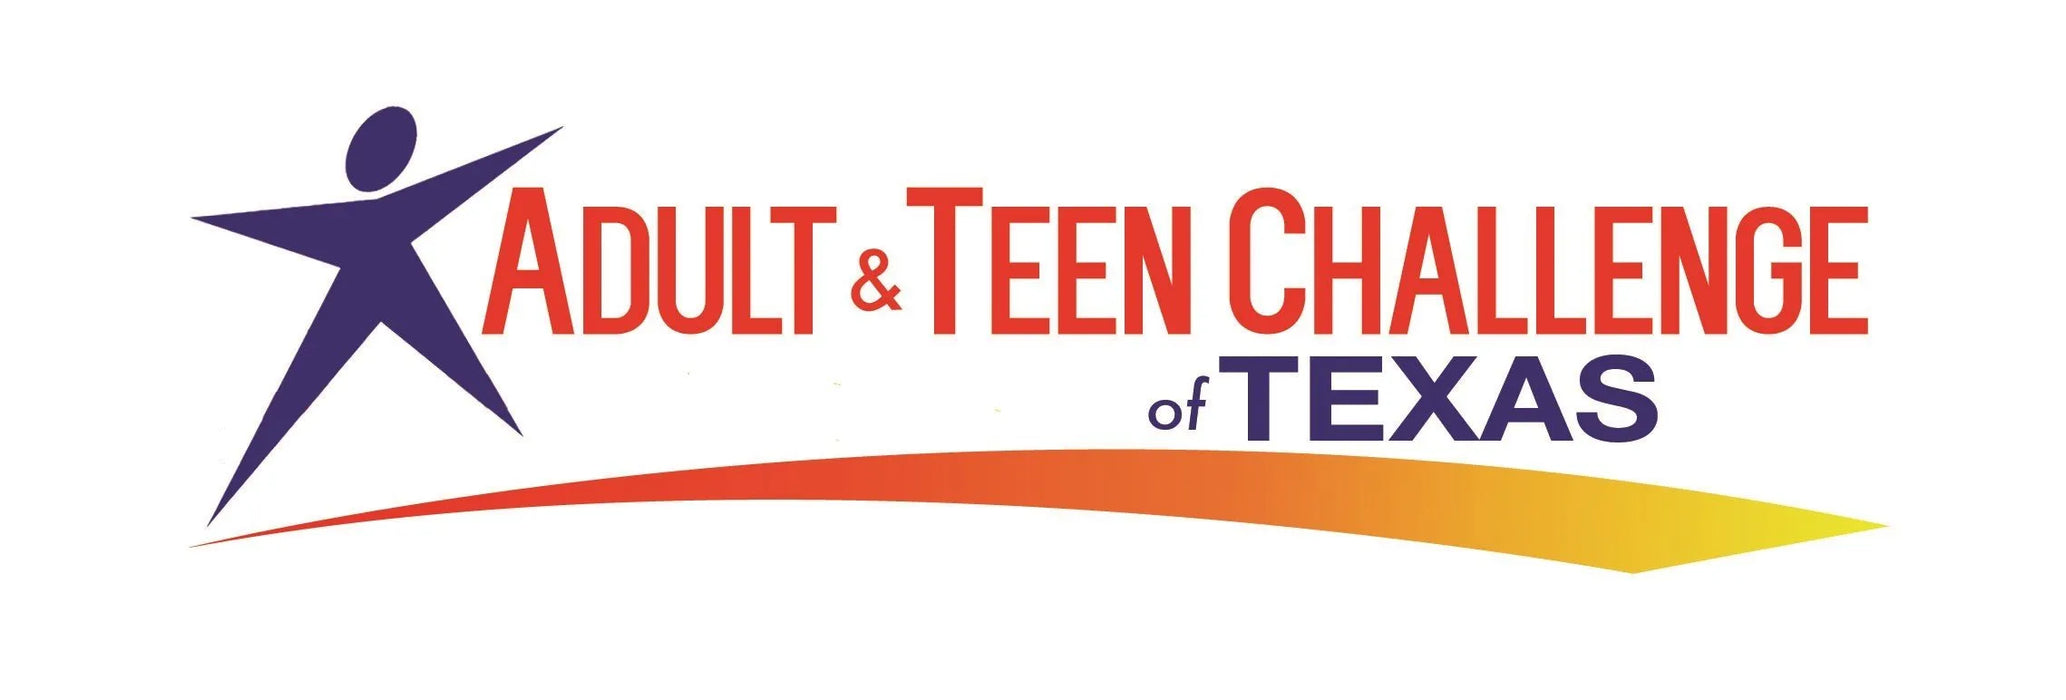 Adult & Teen Challenge of Texas - Performance Laptop